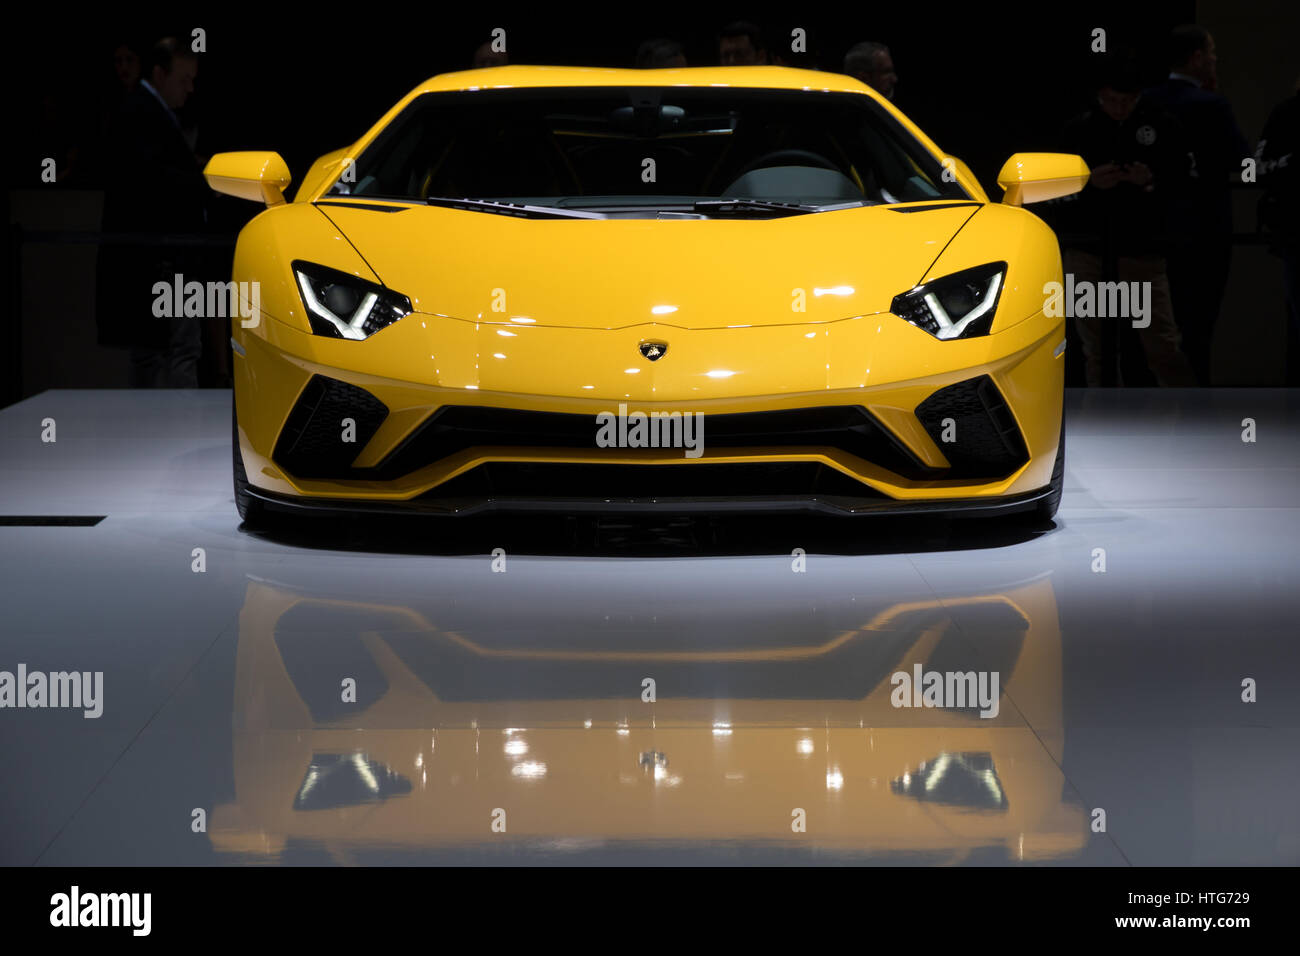 Lamborghini hi-res stock photography and images - Alamy